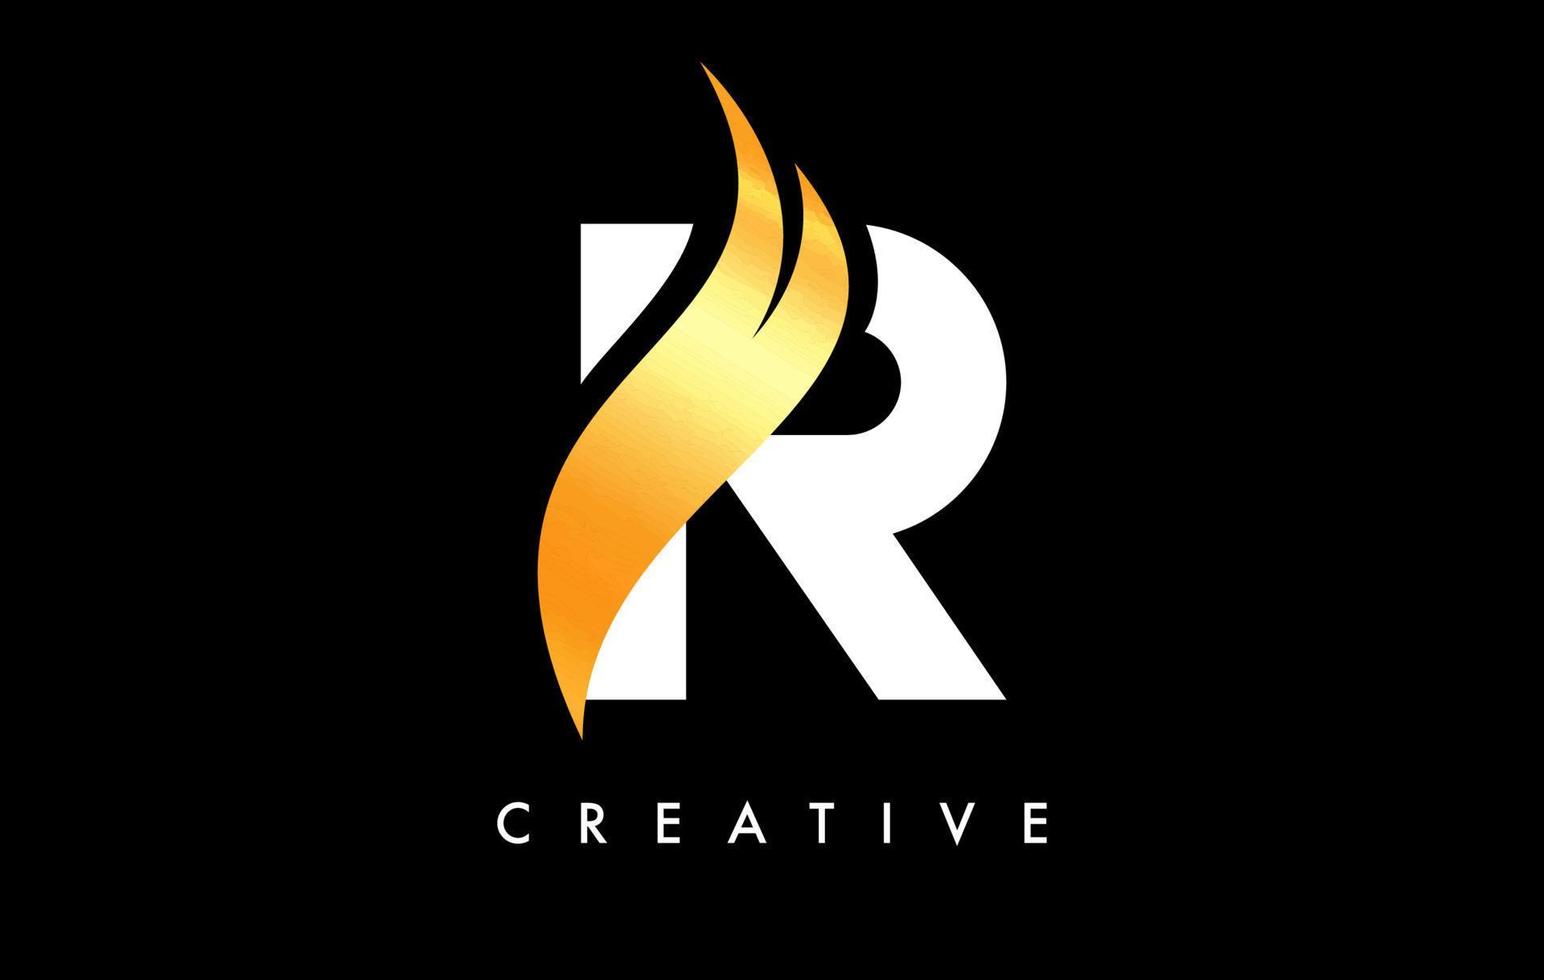 buchstabe r logo icon design mit goldenem swoosh und kreativem kurvenschnittformvektor vektor